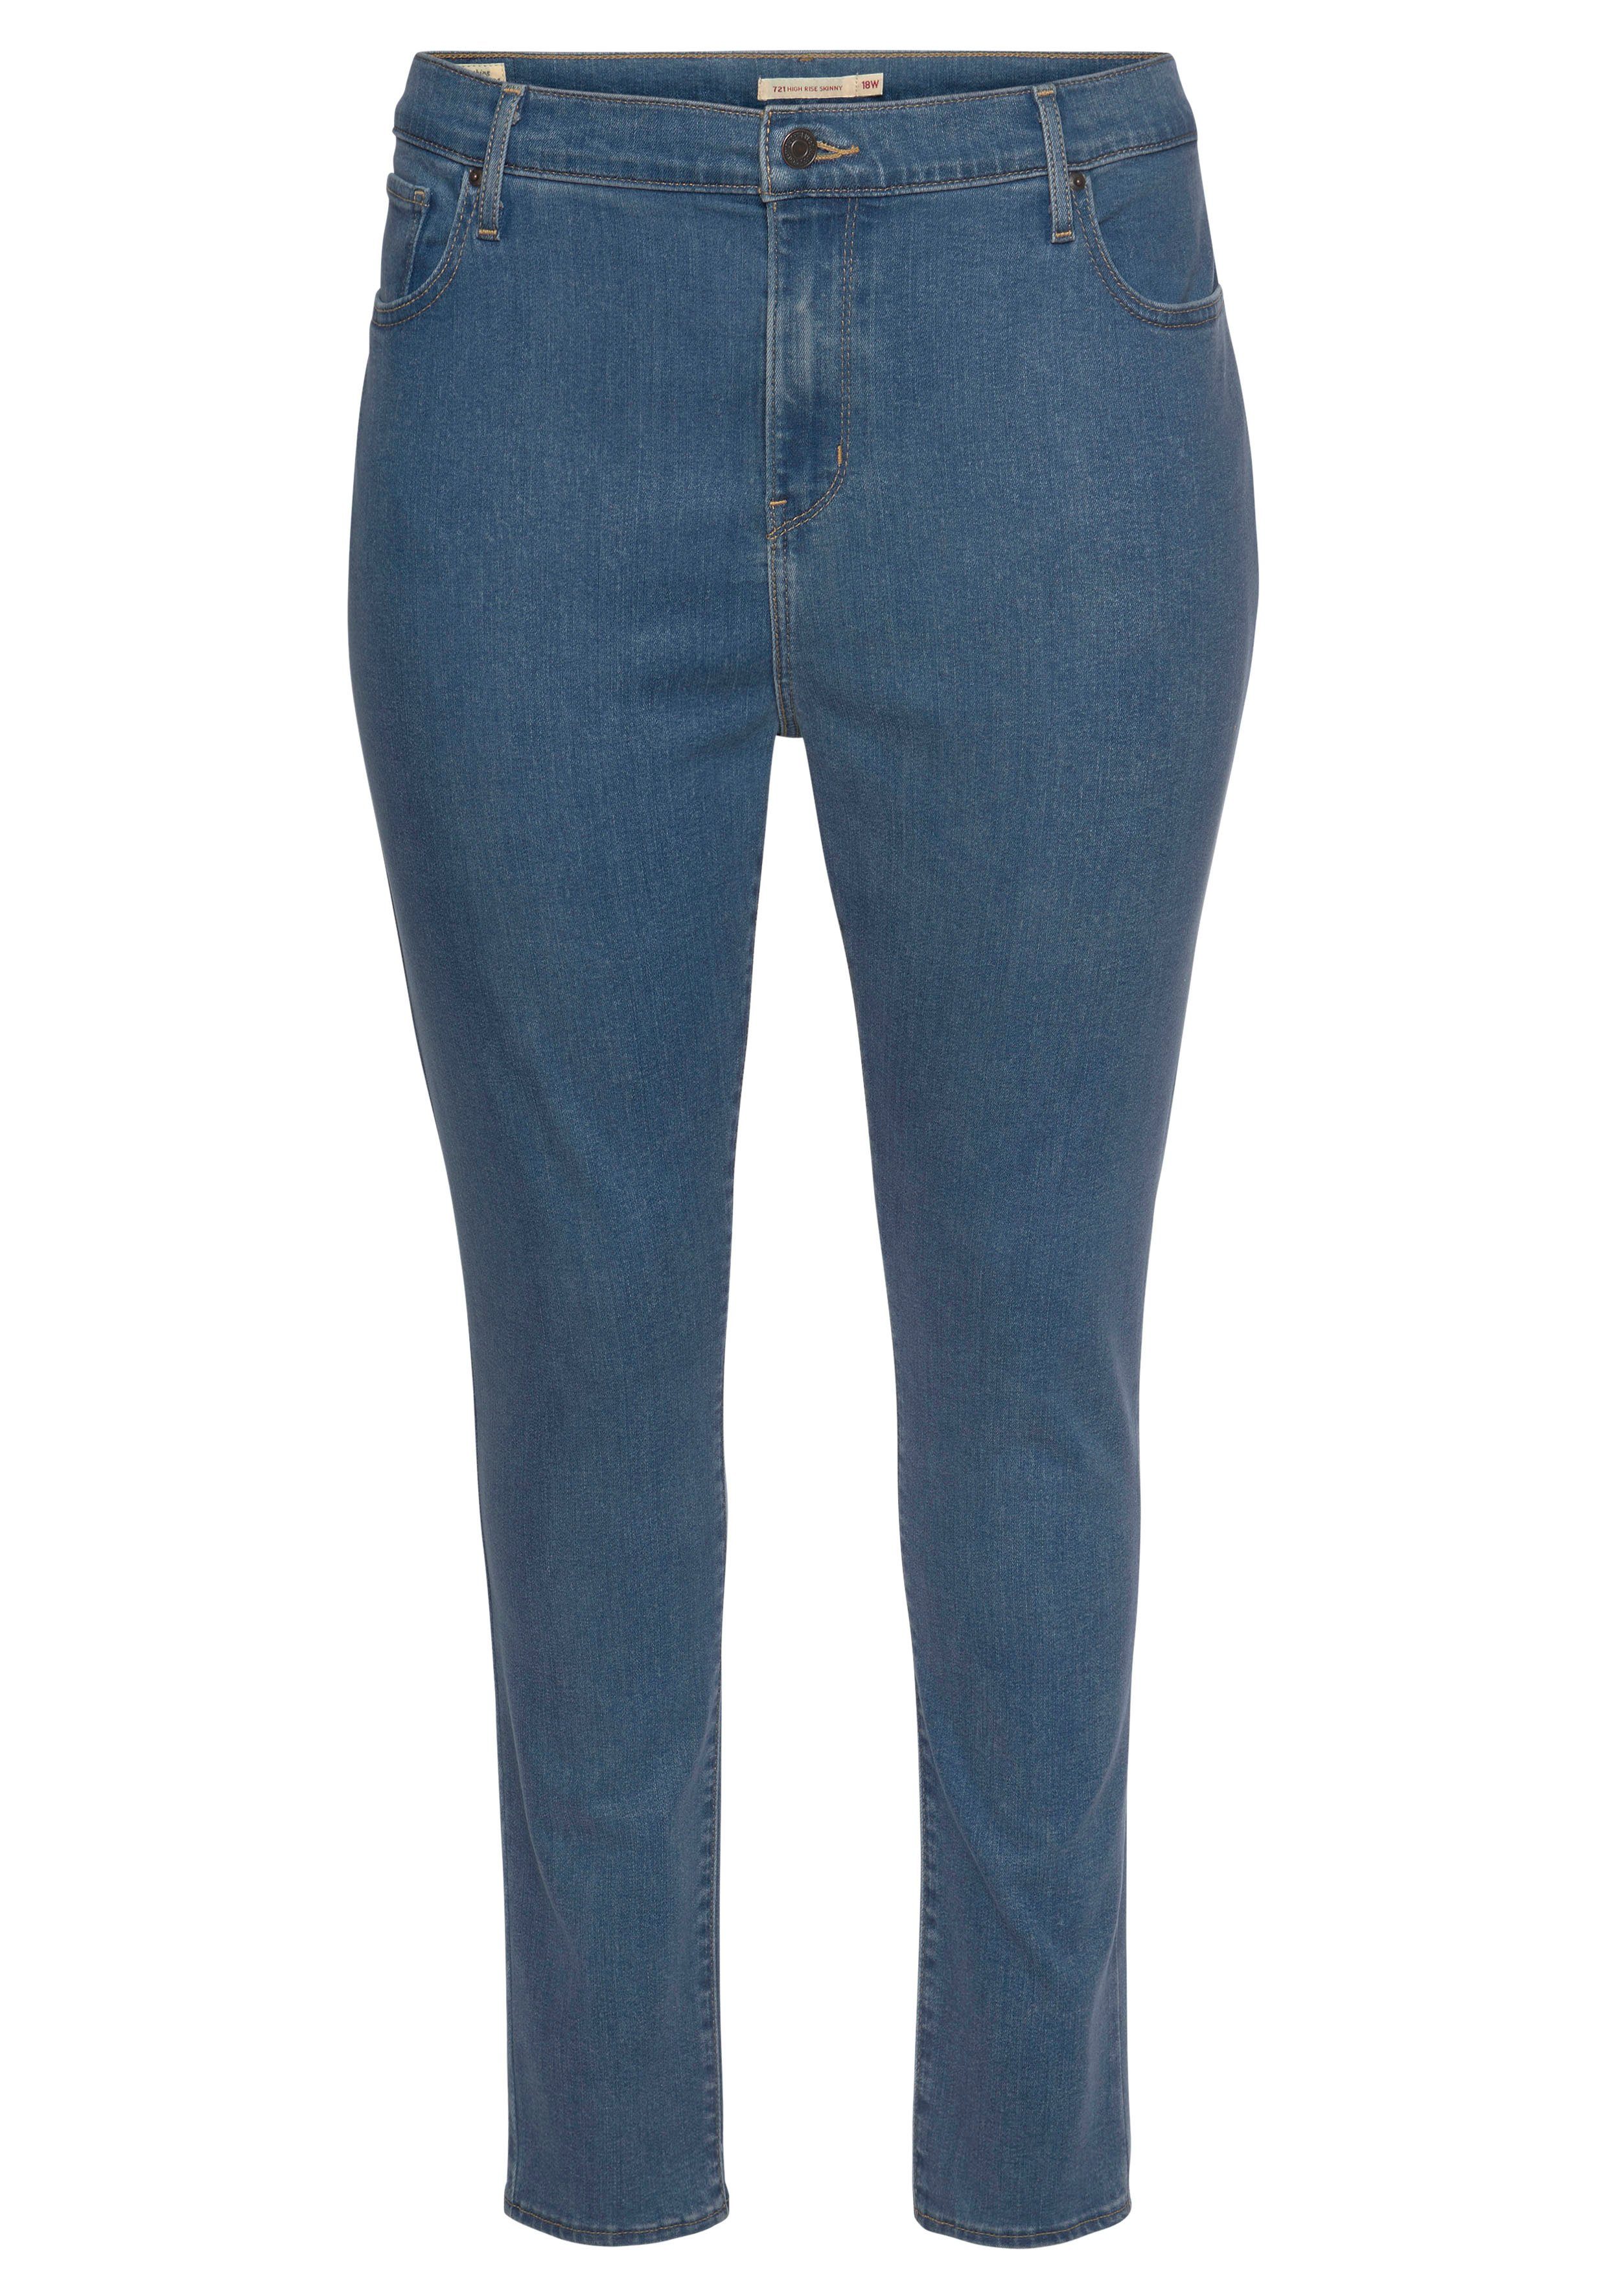 HI 721 SKINNY sehr Schnitt Skinny-fit-Jeans Levi's® RISE mid-blue PL figurbetonter Plus